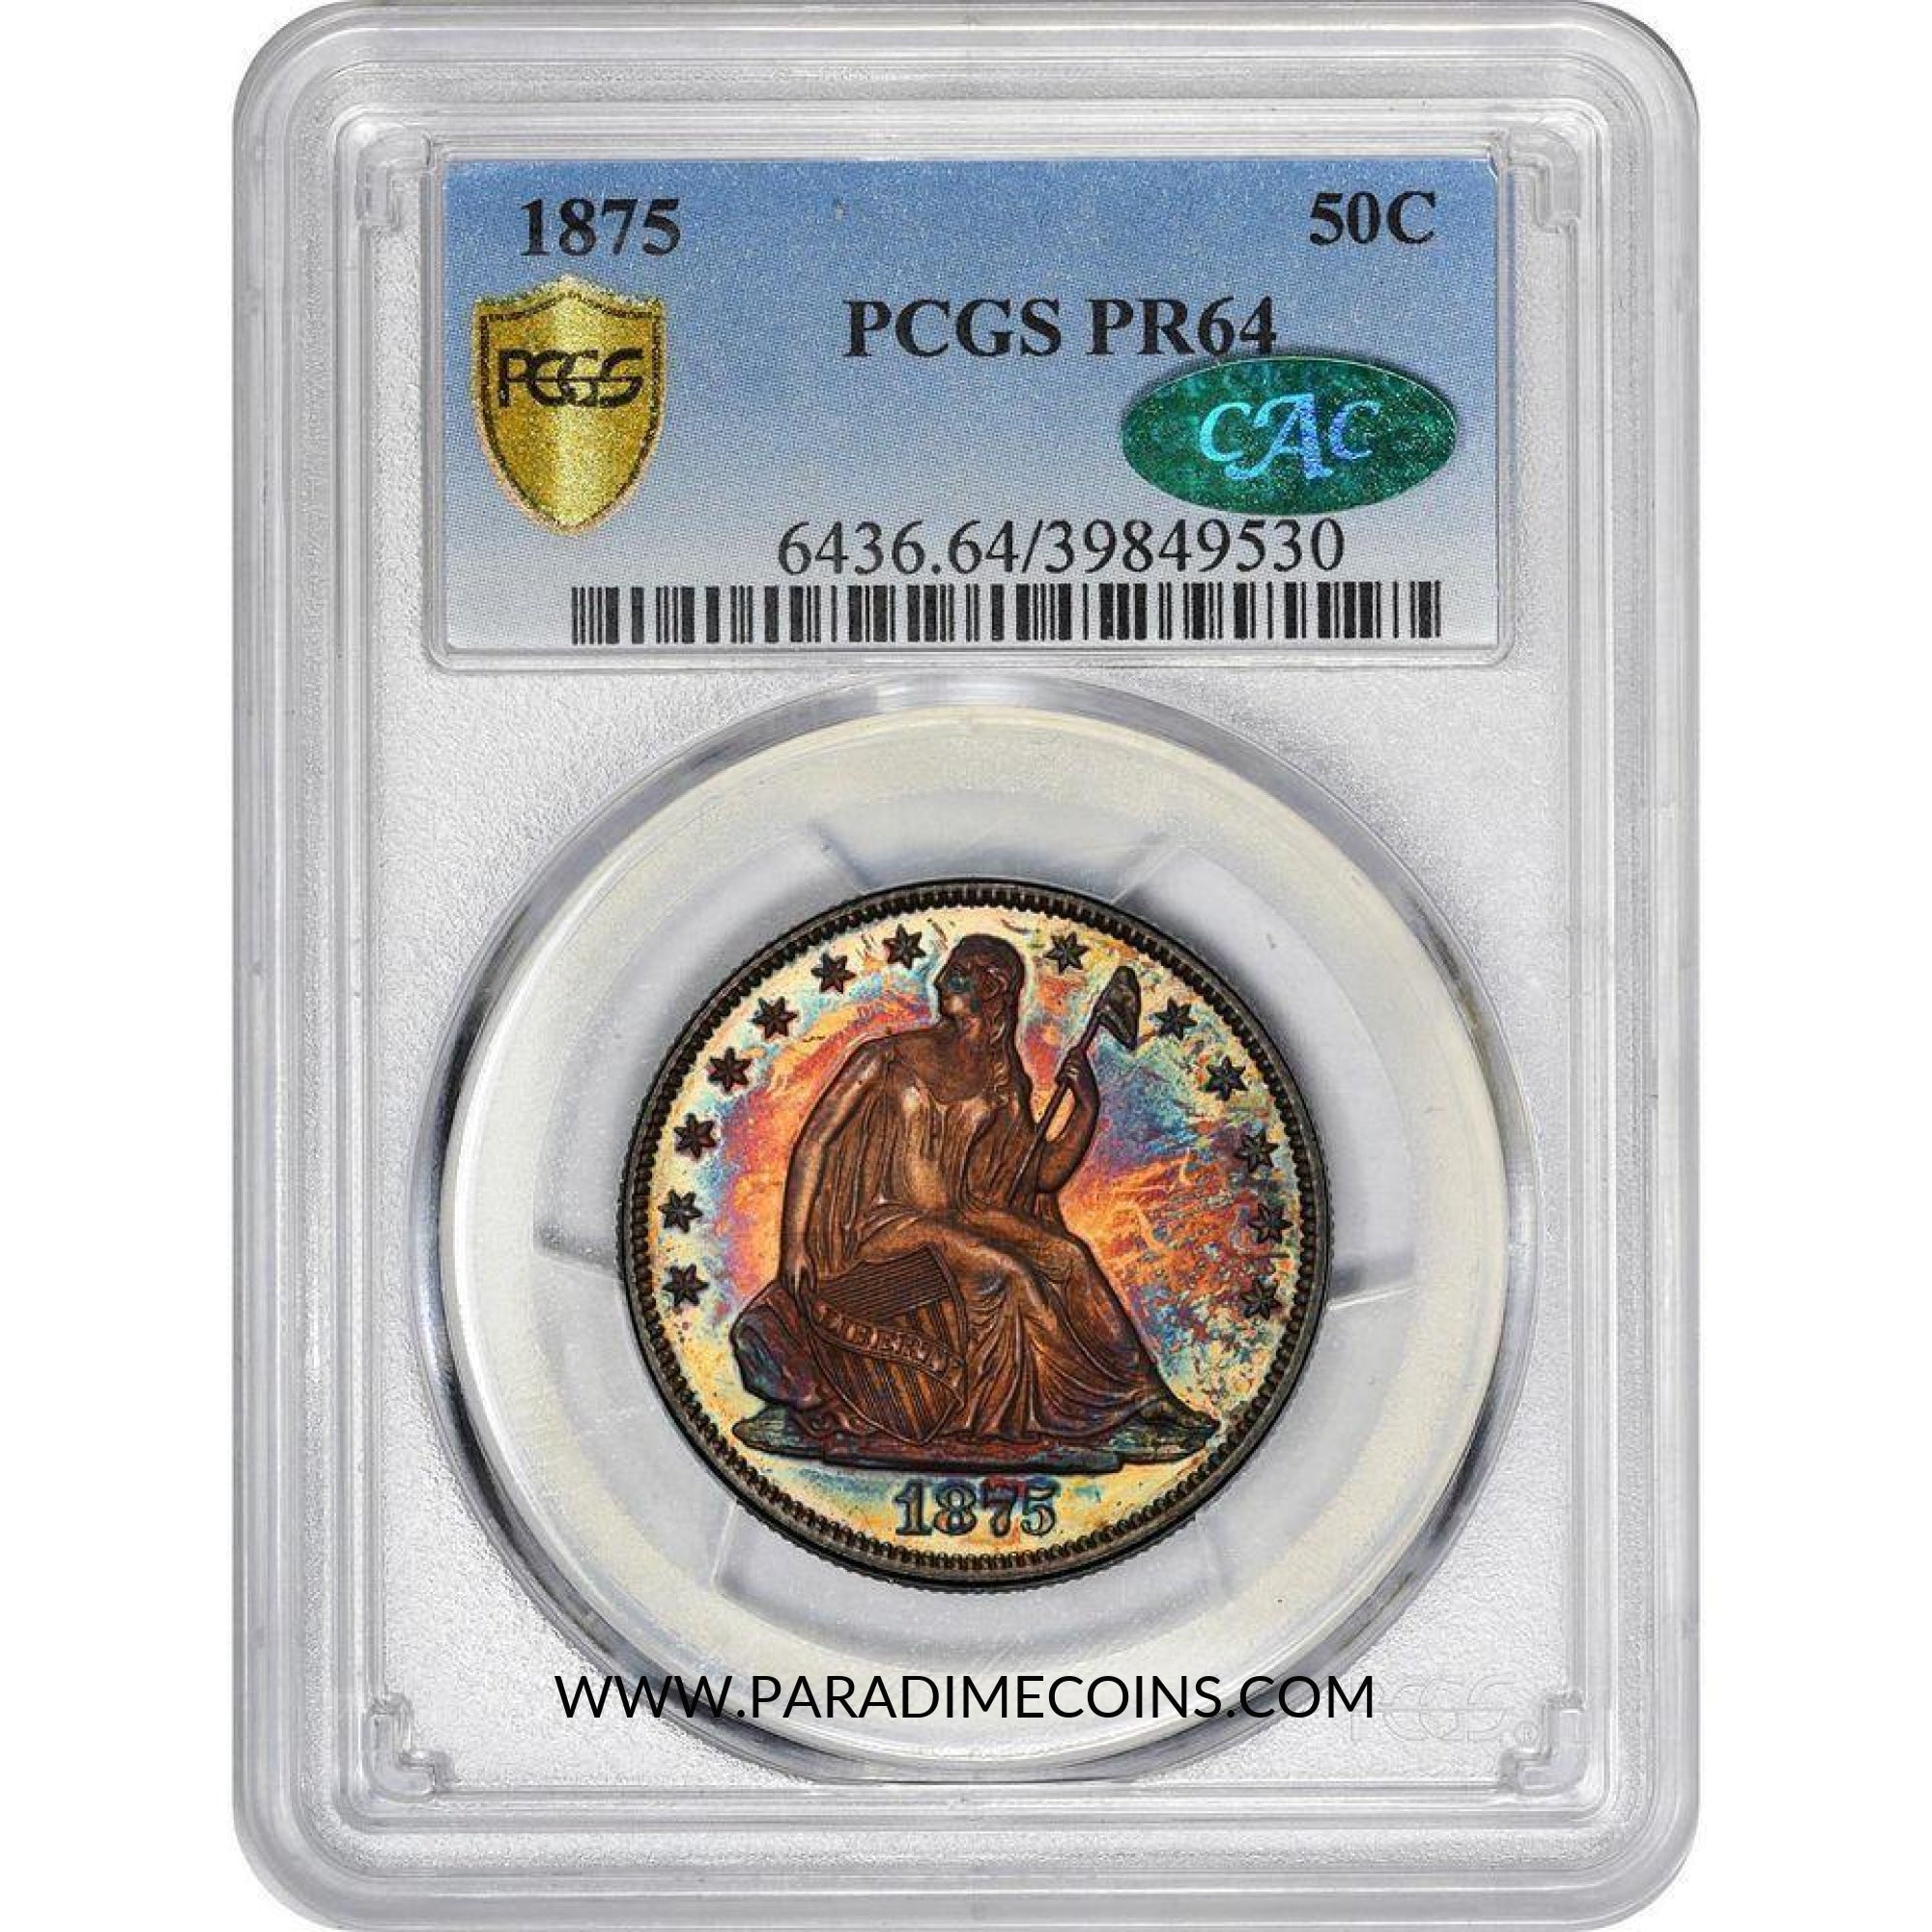 1875 50C PR64 PCGS CAC - Paradime Coins | PCGS NGC CACG CAC Rare US Numismatic Coins For Sale